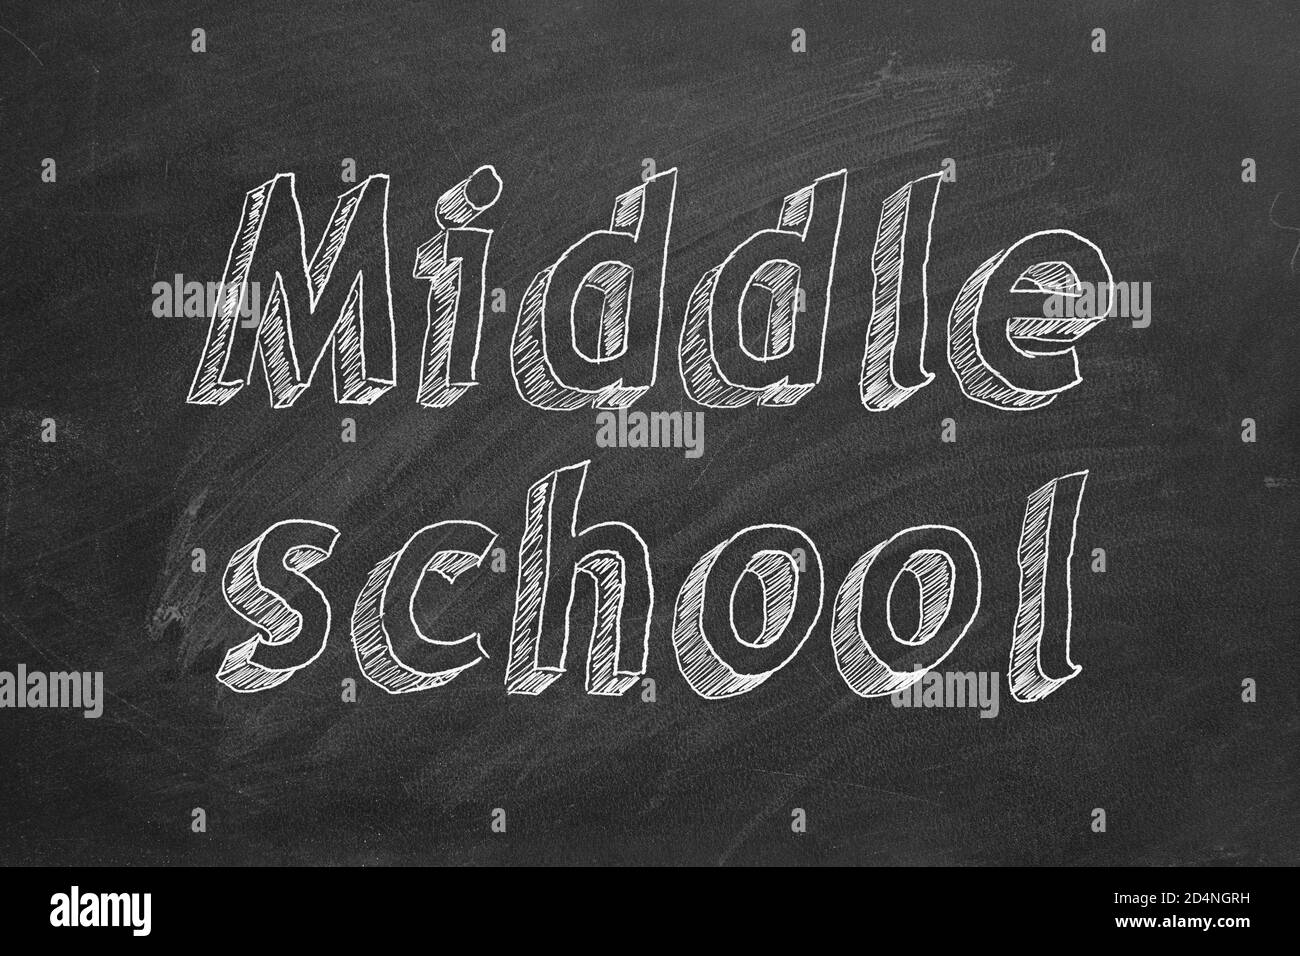 Hand drawing 'Middle school' on black chalkboard Stock Photo